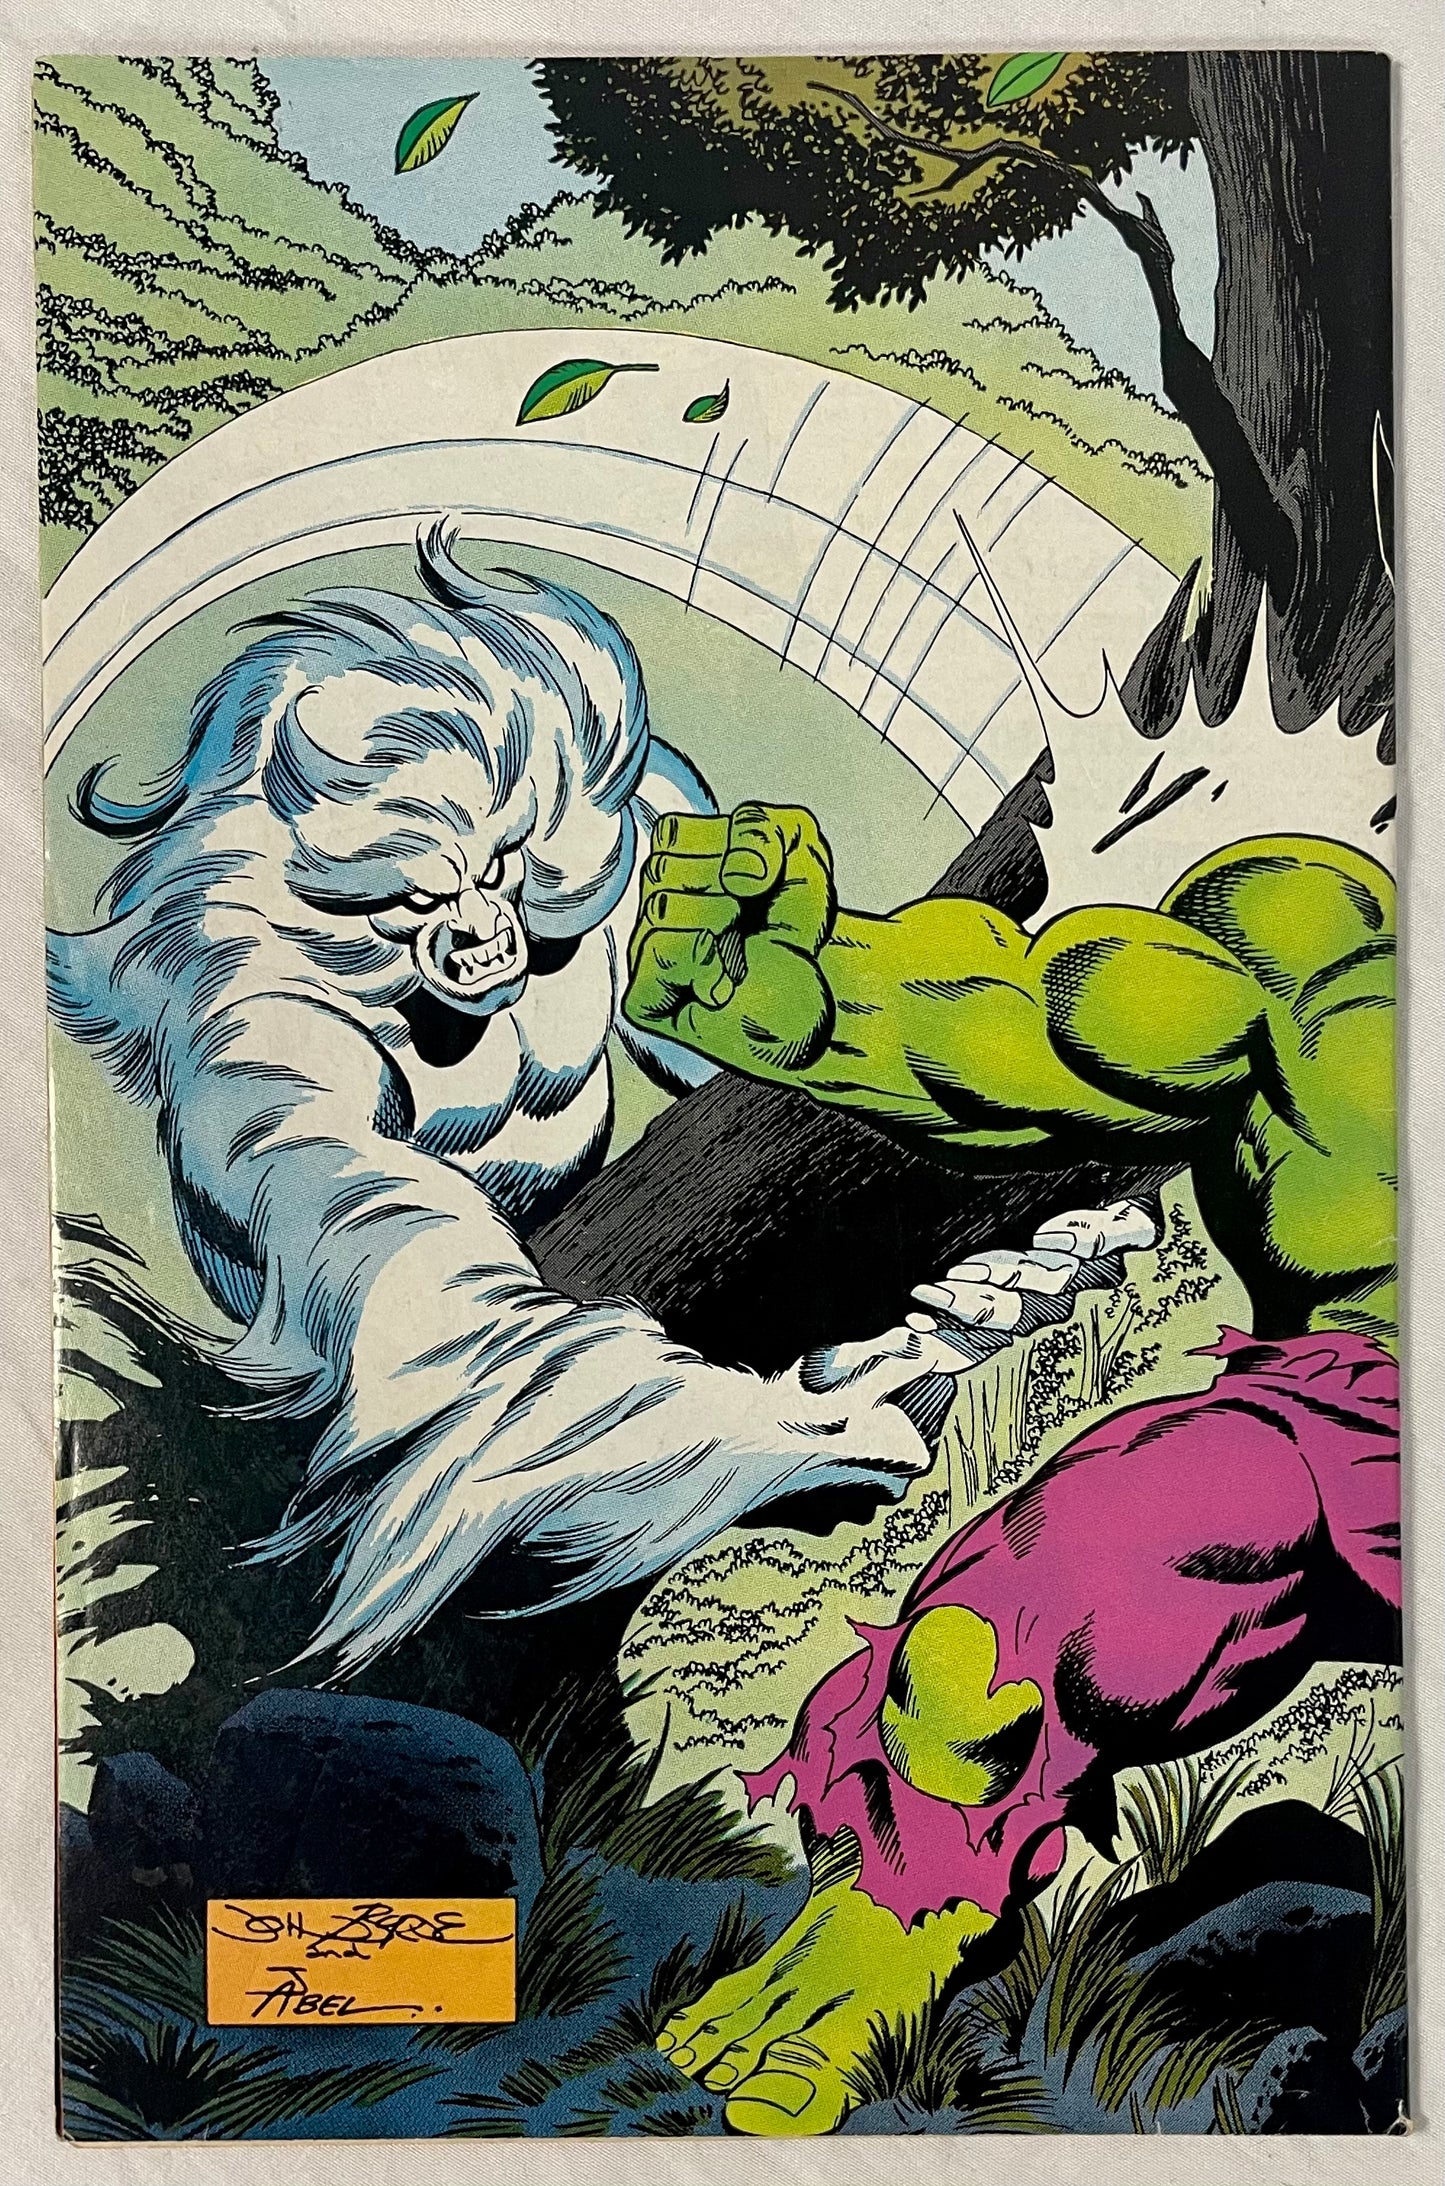 Marvel Comics 25th Incredible Hulk And Wolverine #1